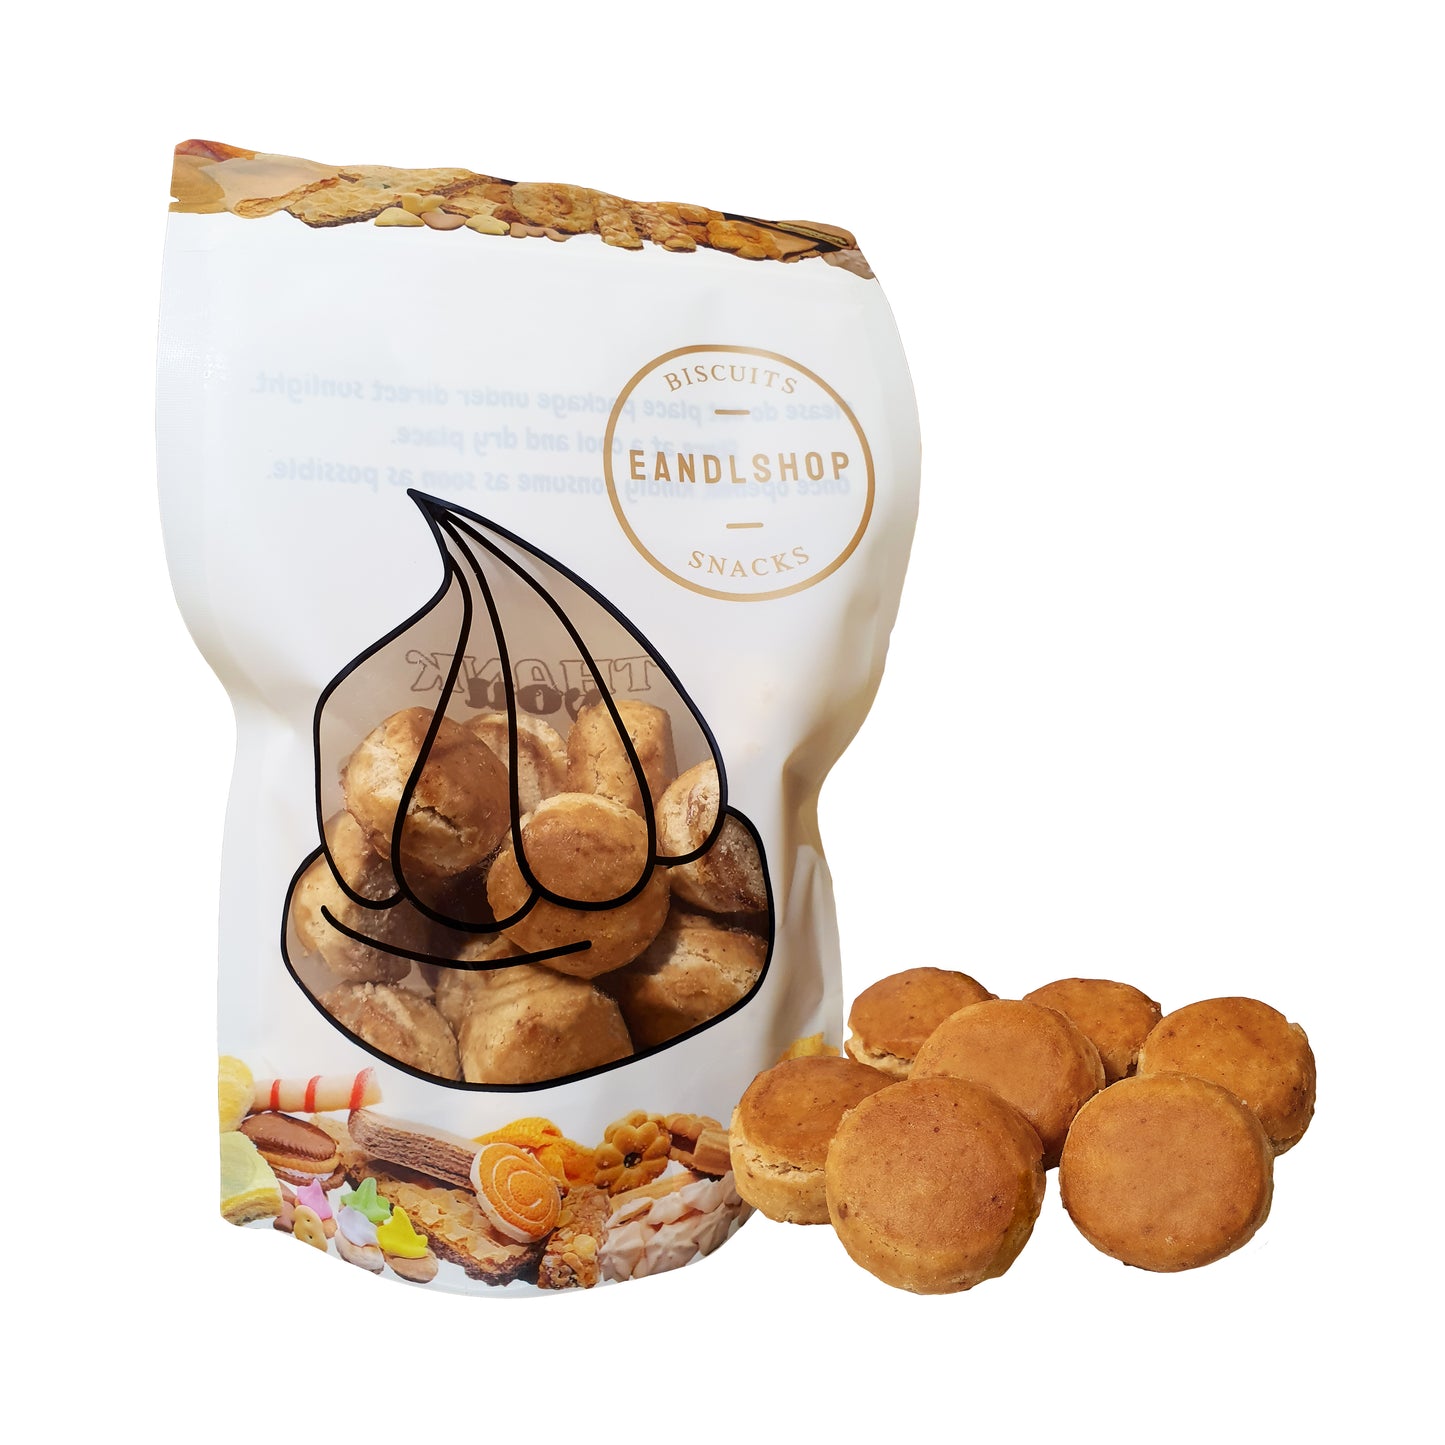 Peanut Cookies. Old-school biscuits, modern snacks (chips, crackers), cakes, gummies, plums, dried fruits, nuts, herbal tea – available at www.EANDLSHOP.com